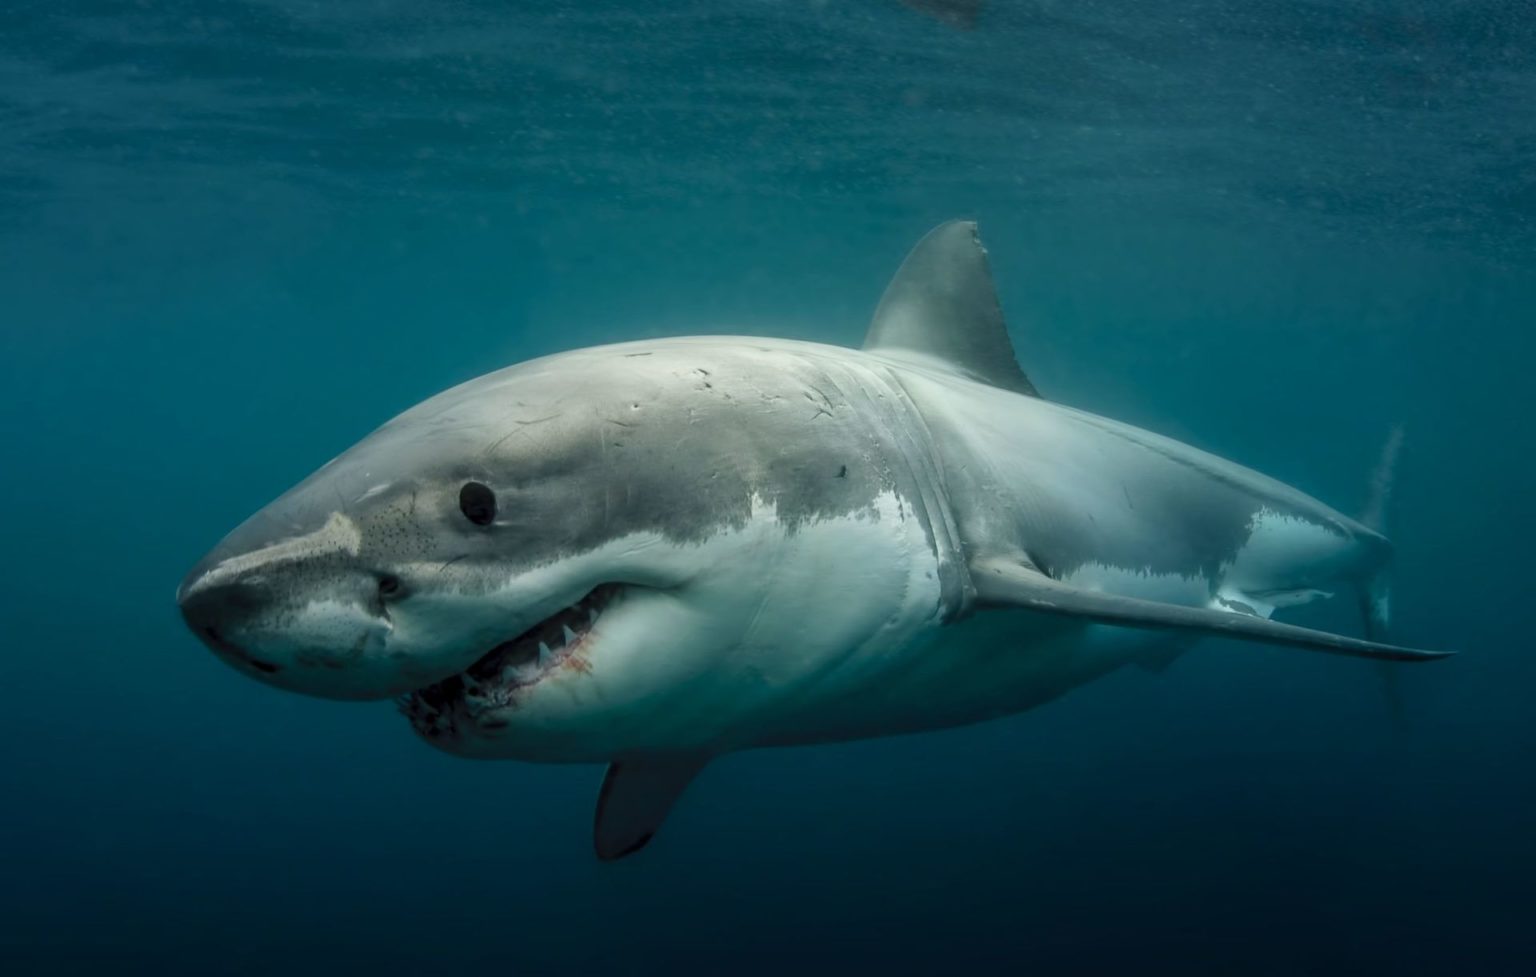 Great White Shark Legend Rodney Fox